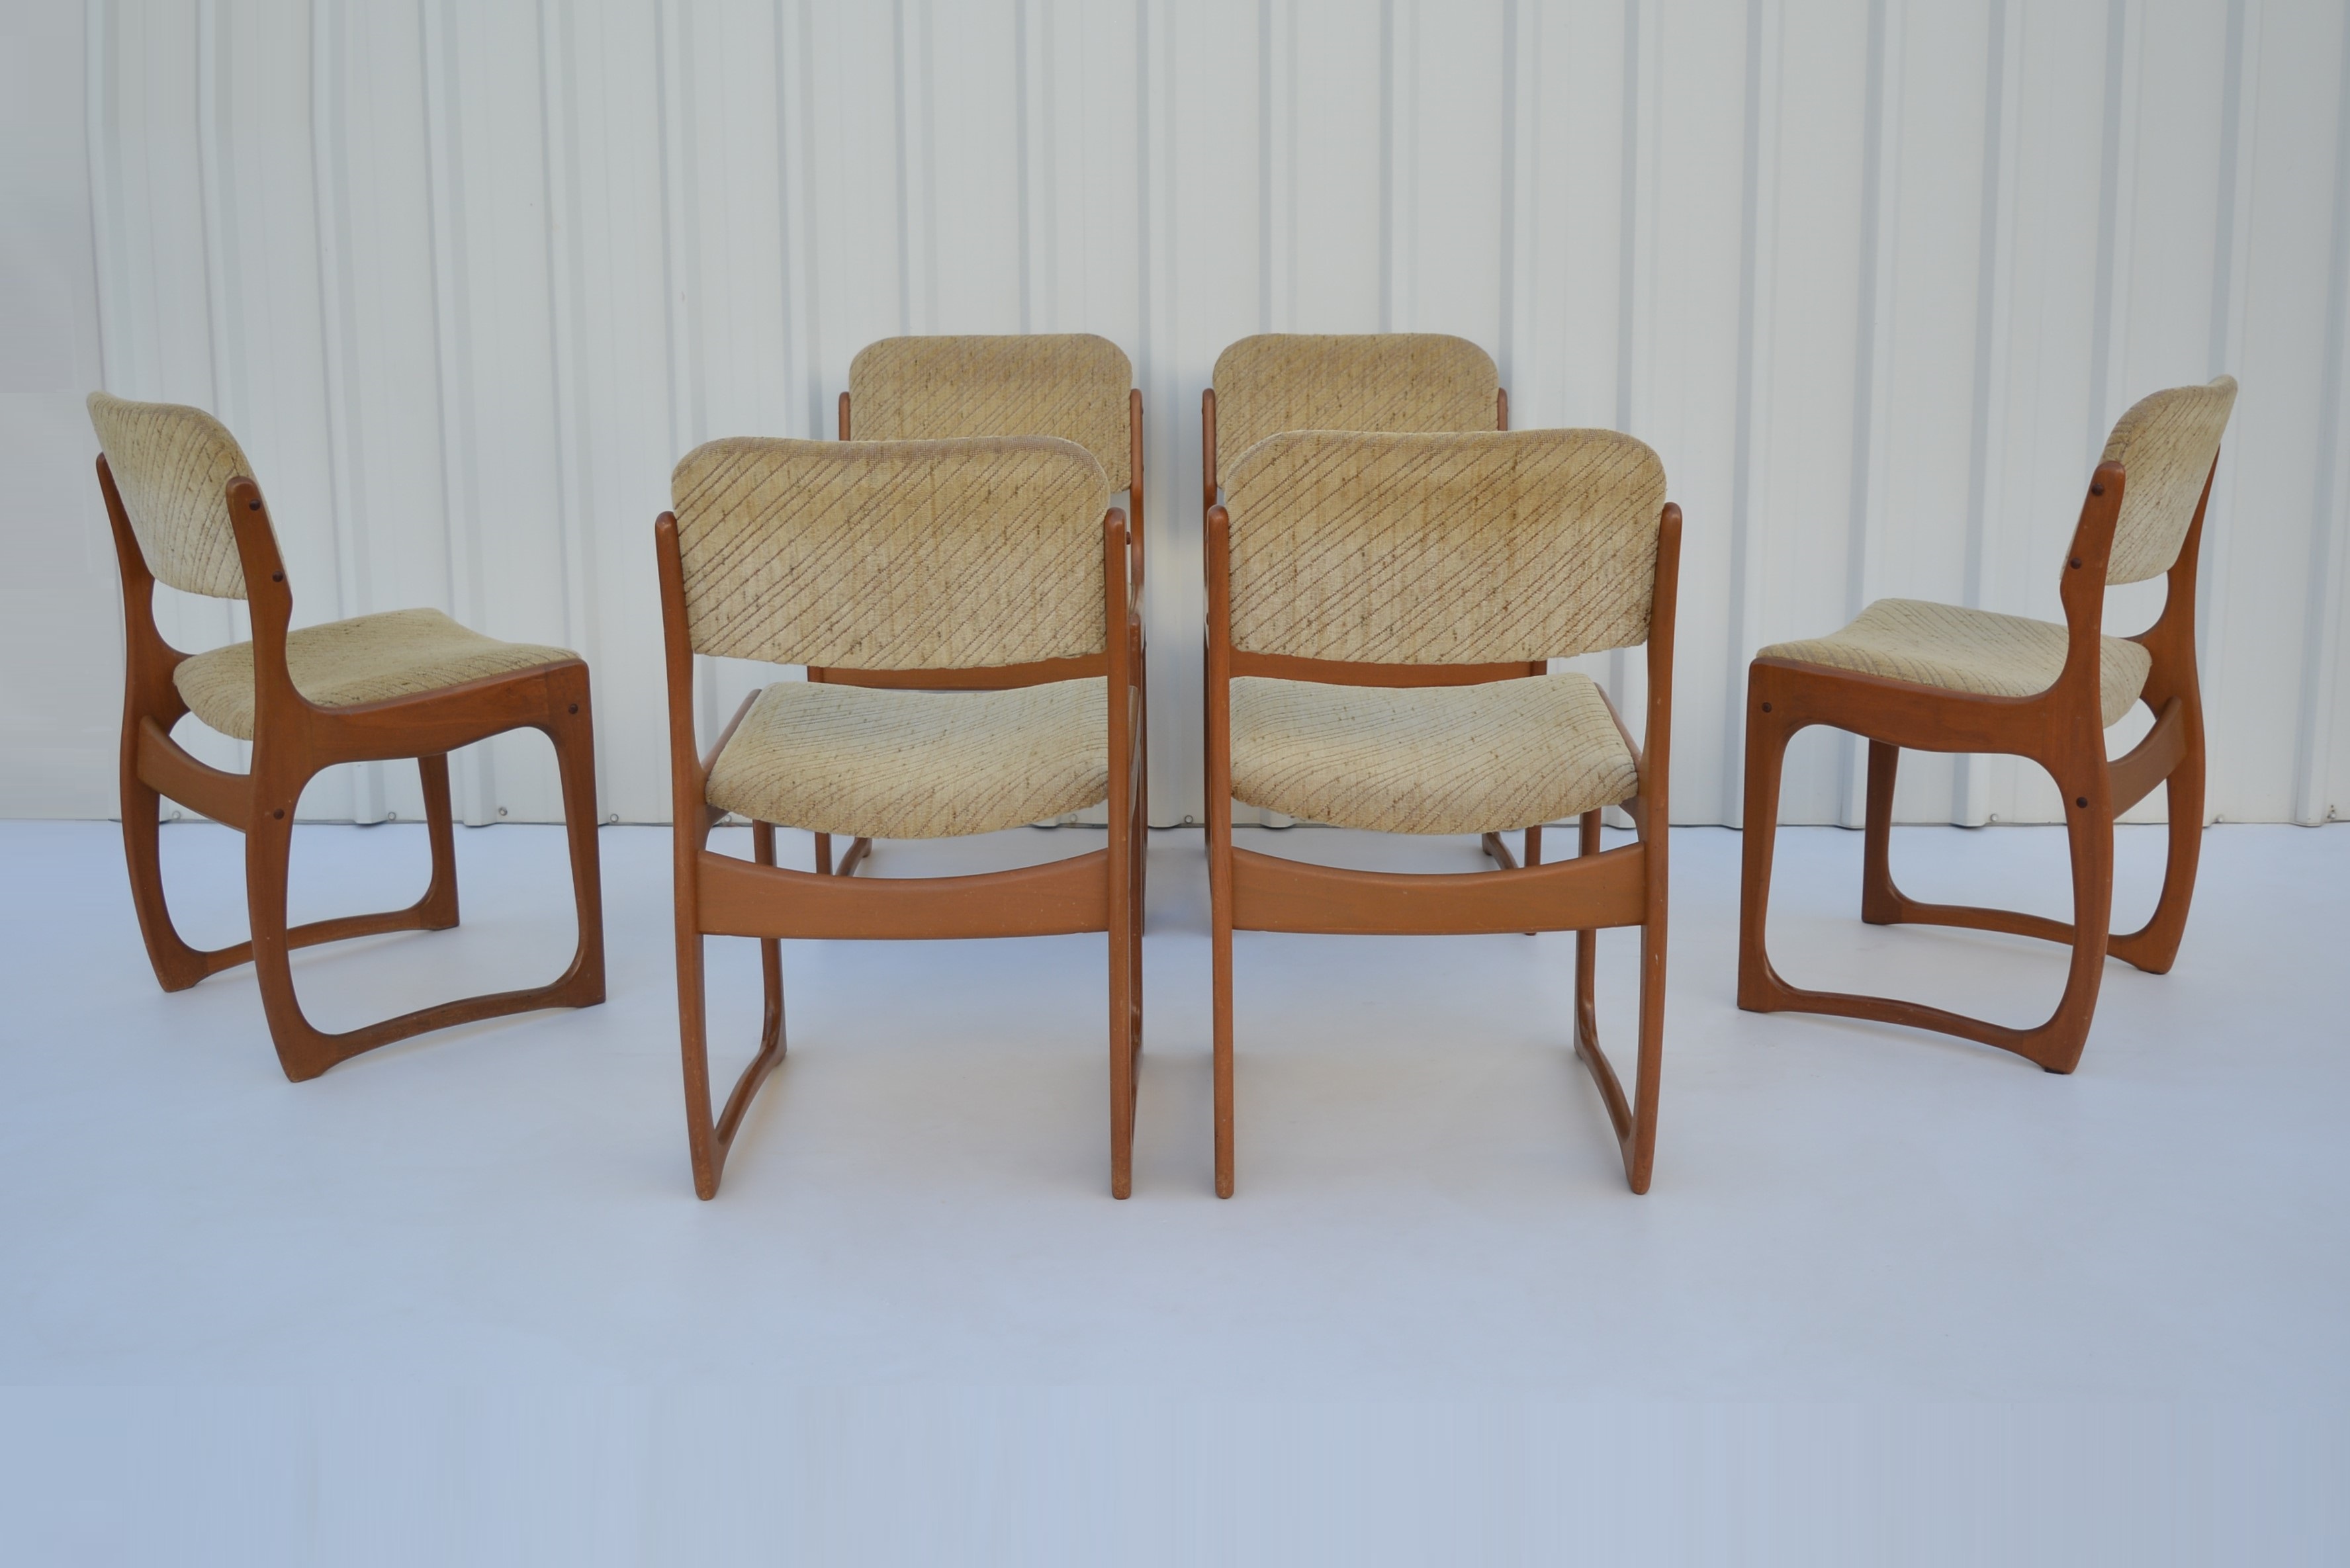 6 vintage danish dining chairs sculptural parker chairs era retro  chairs vintage chairs